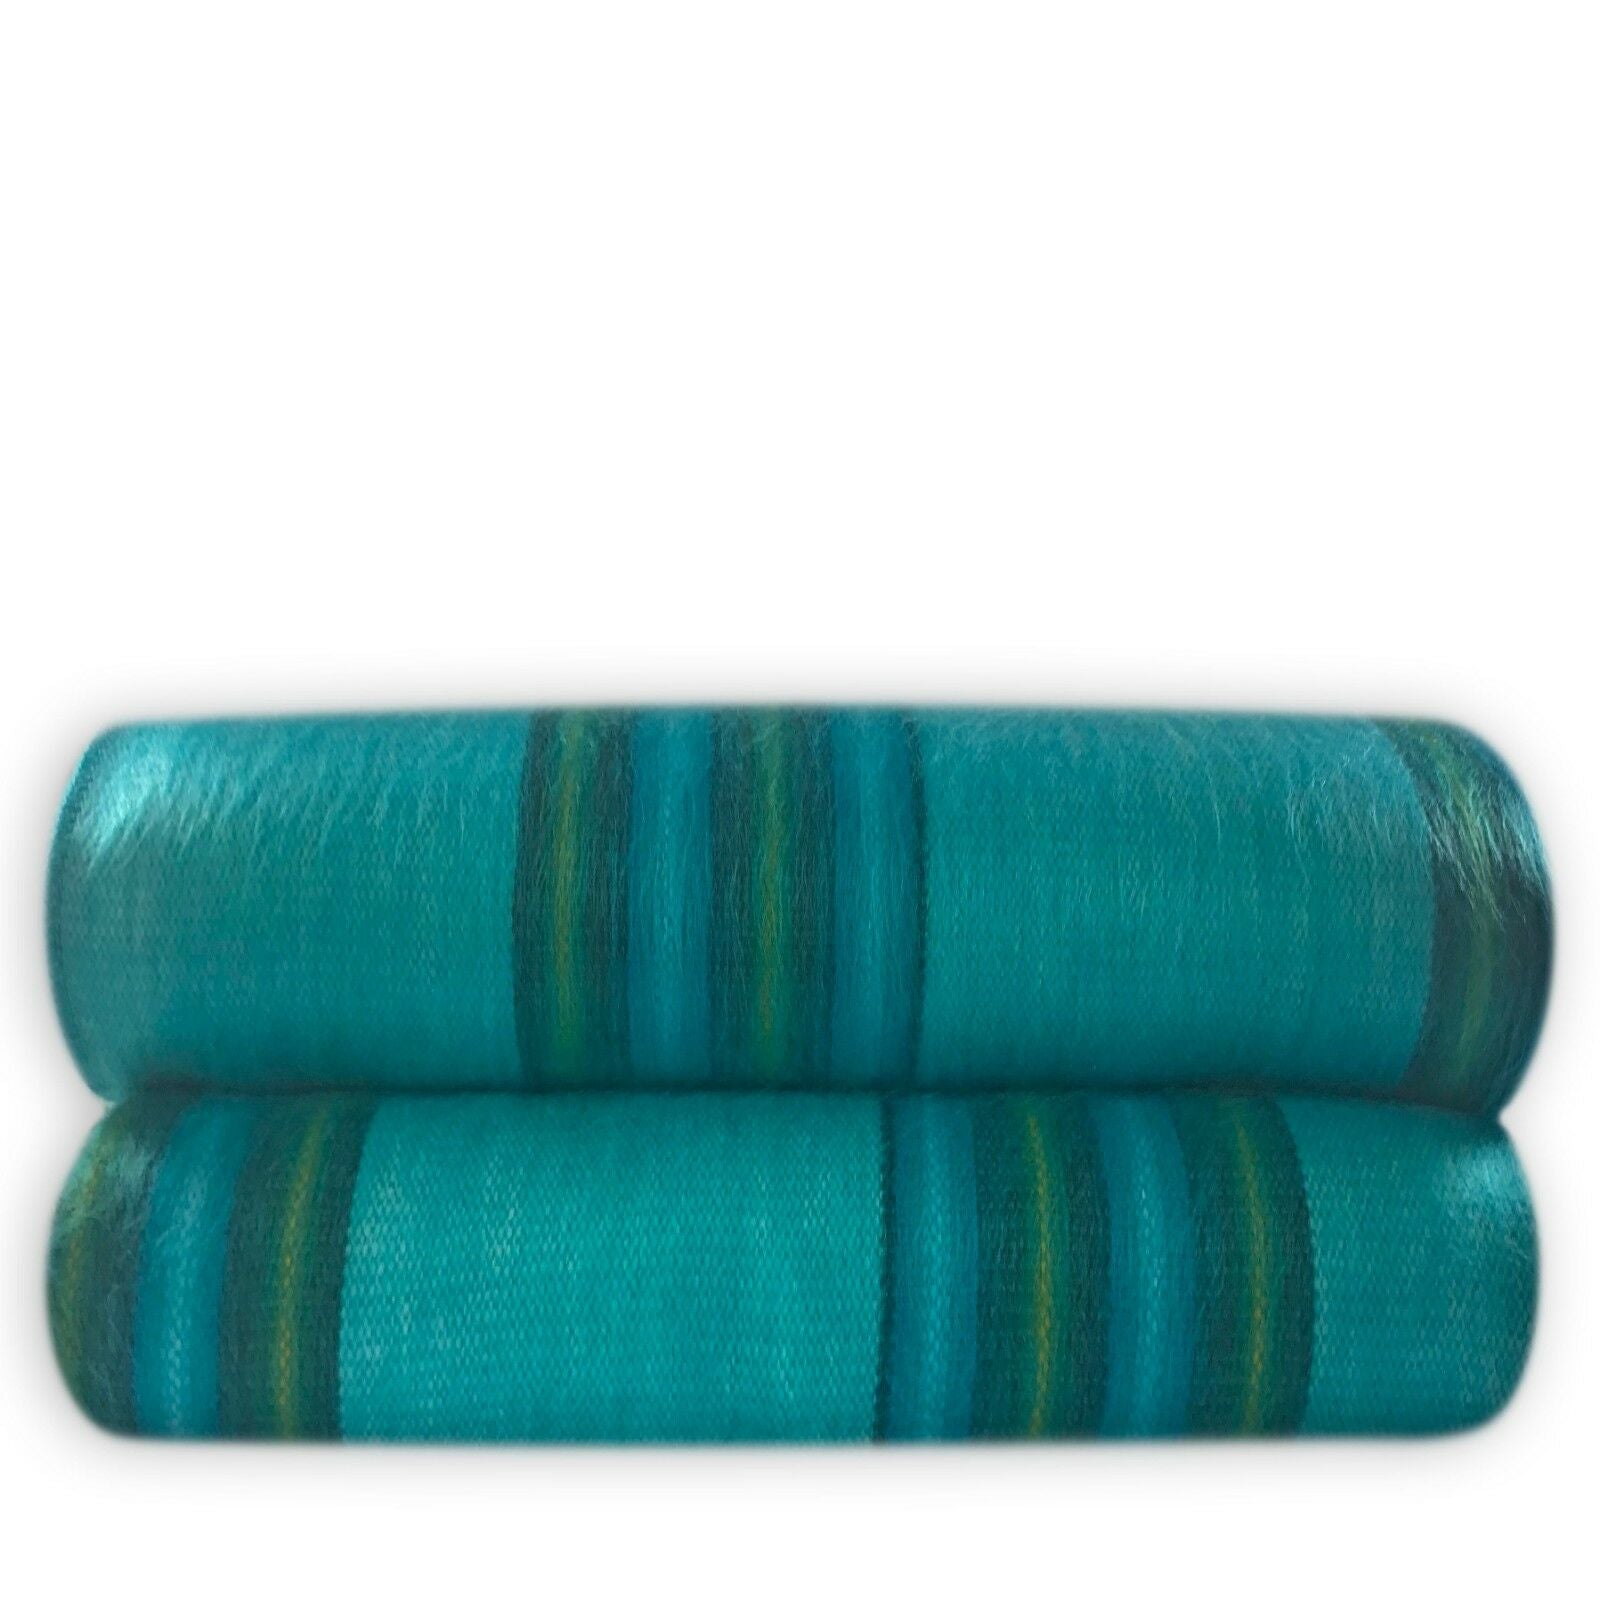 Machay - Baby Alpaca Wool Throw Blanket / Sofa Cover - Queen 90" x 63" - Aqua/Turquoise/Green